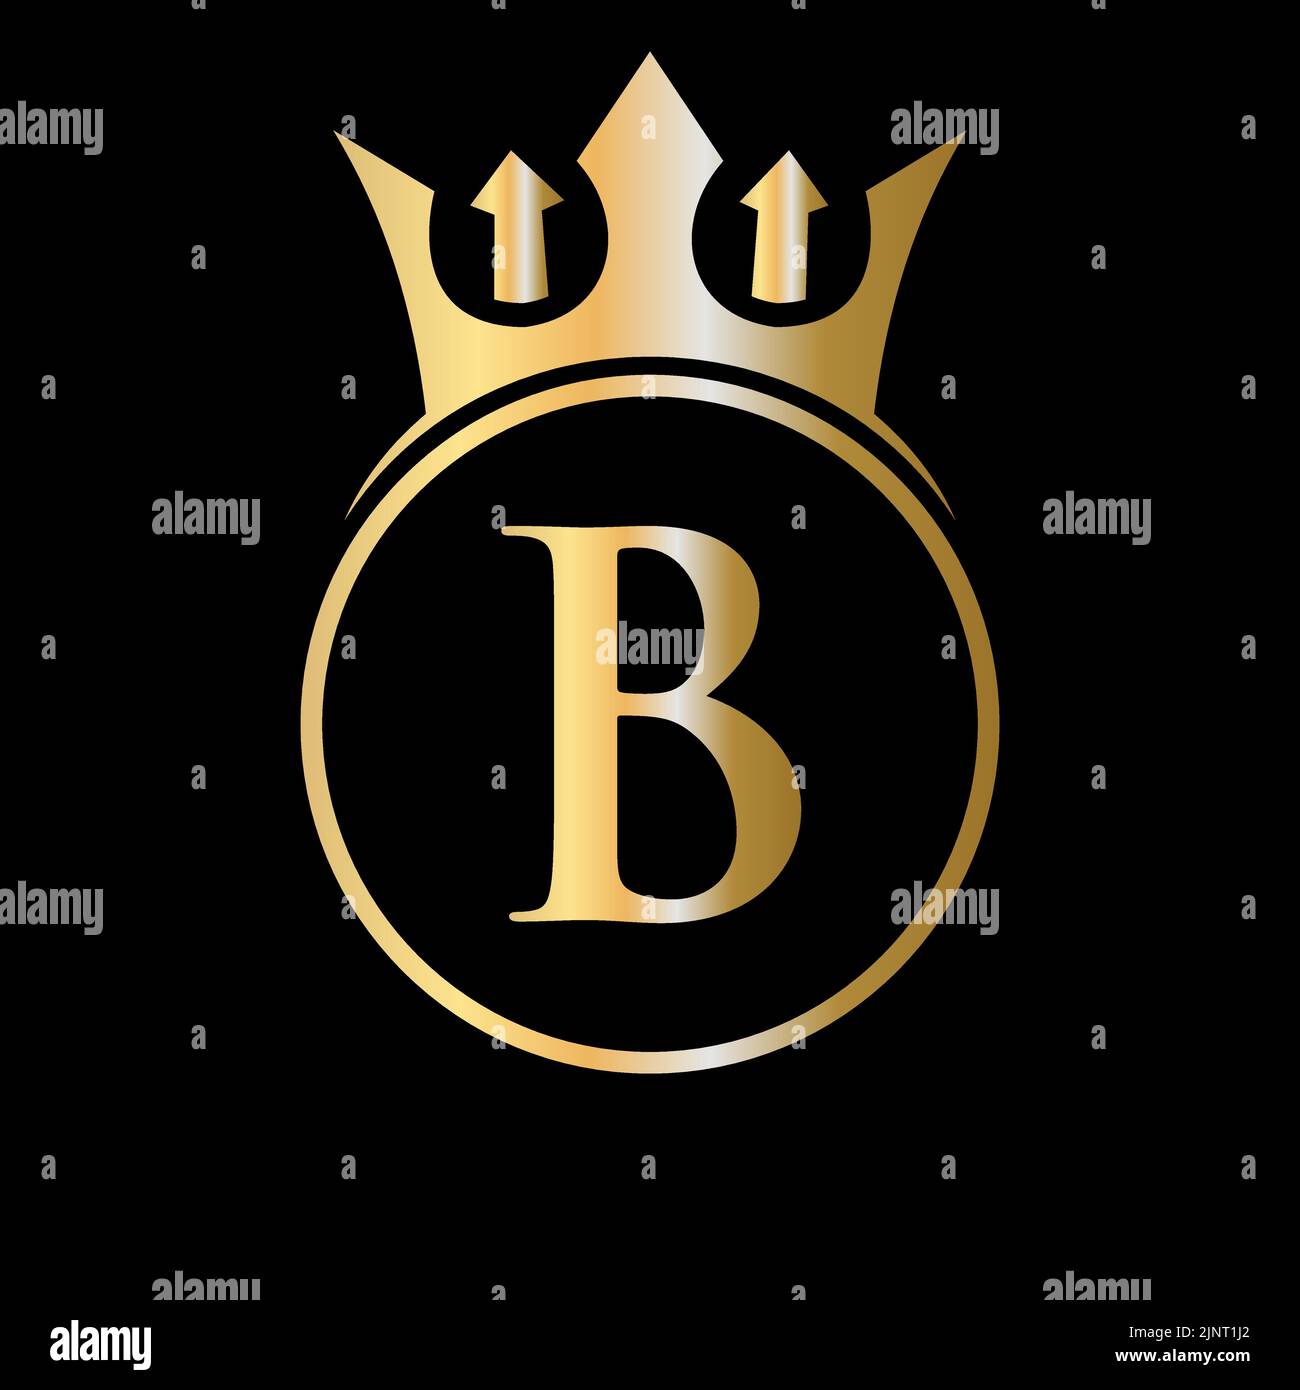 Luxury Letter B Crown Logo. Crown Logo on Letter B Vector Template for ...